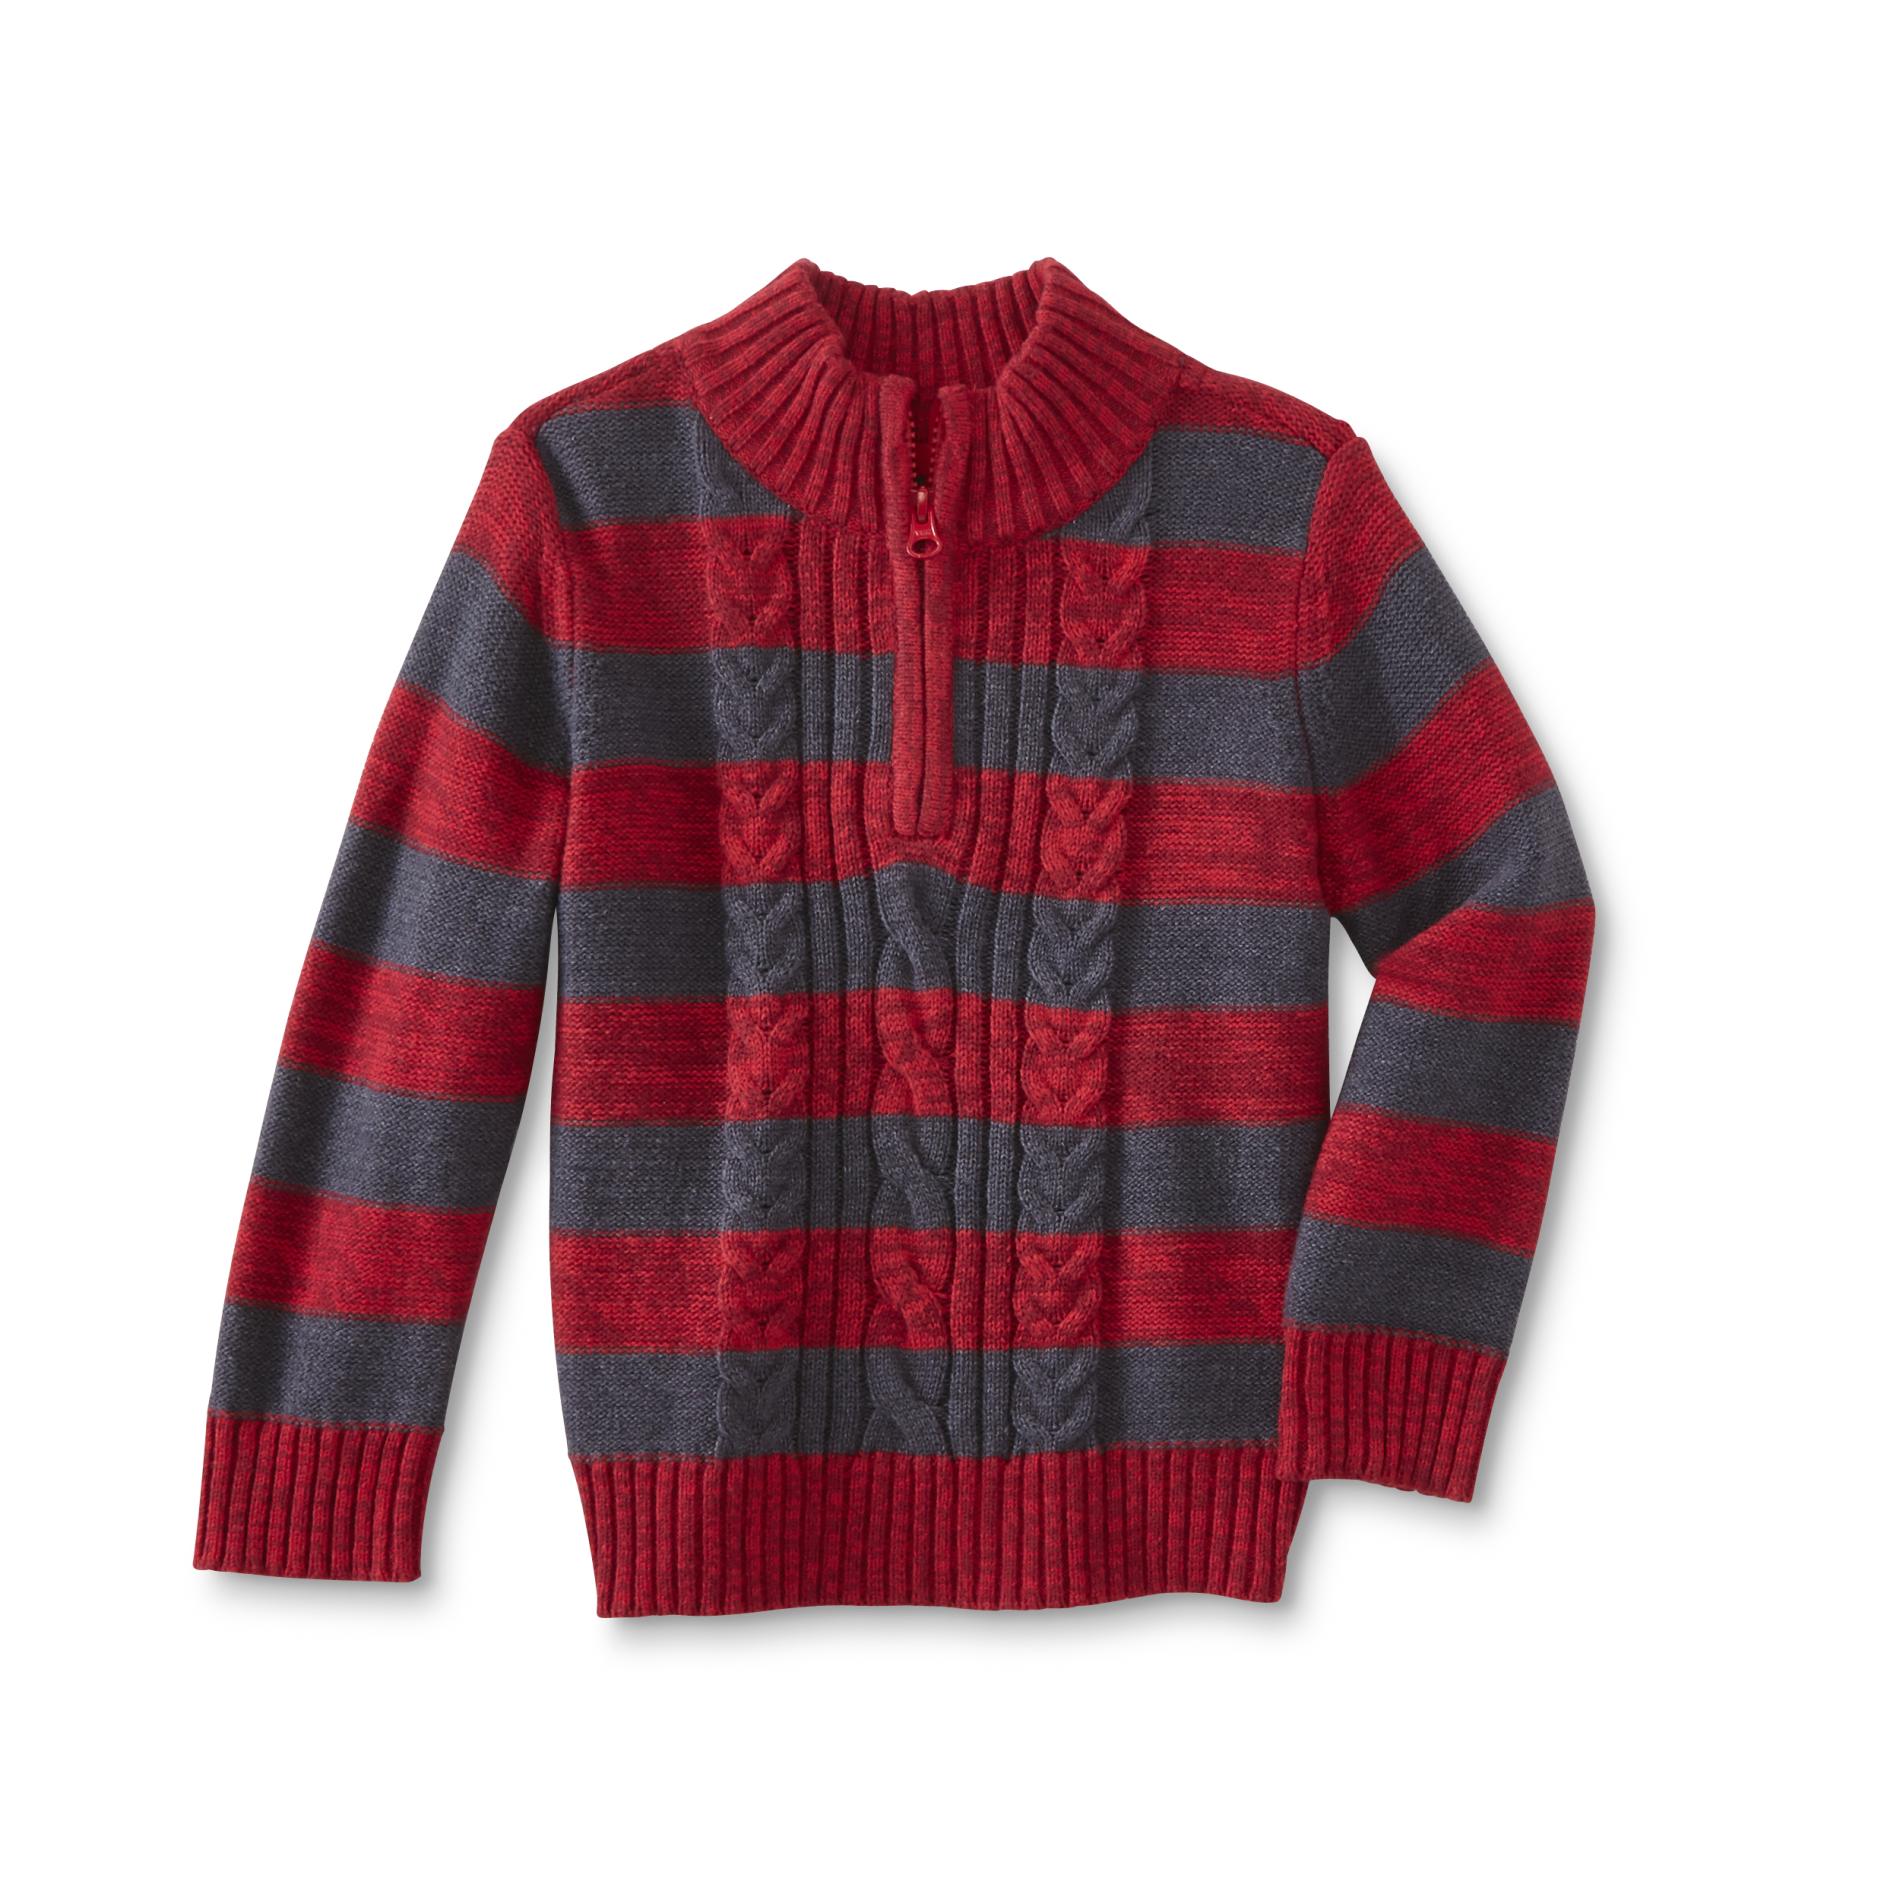 Toughskins Infant & Toddler Boys' Quarter-Zip Sweater - Striped